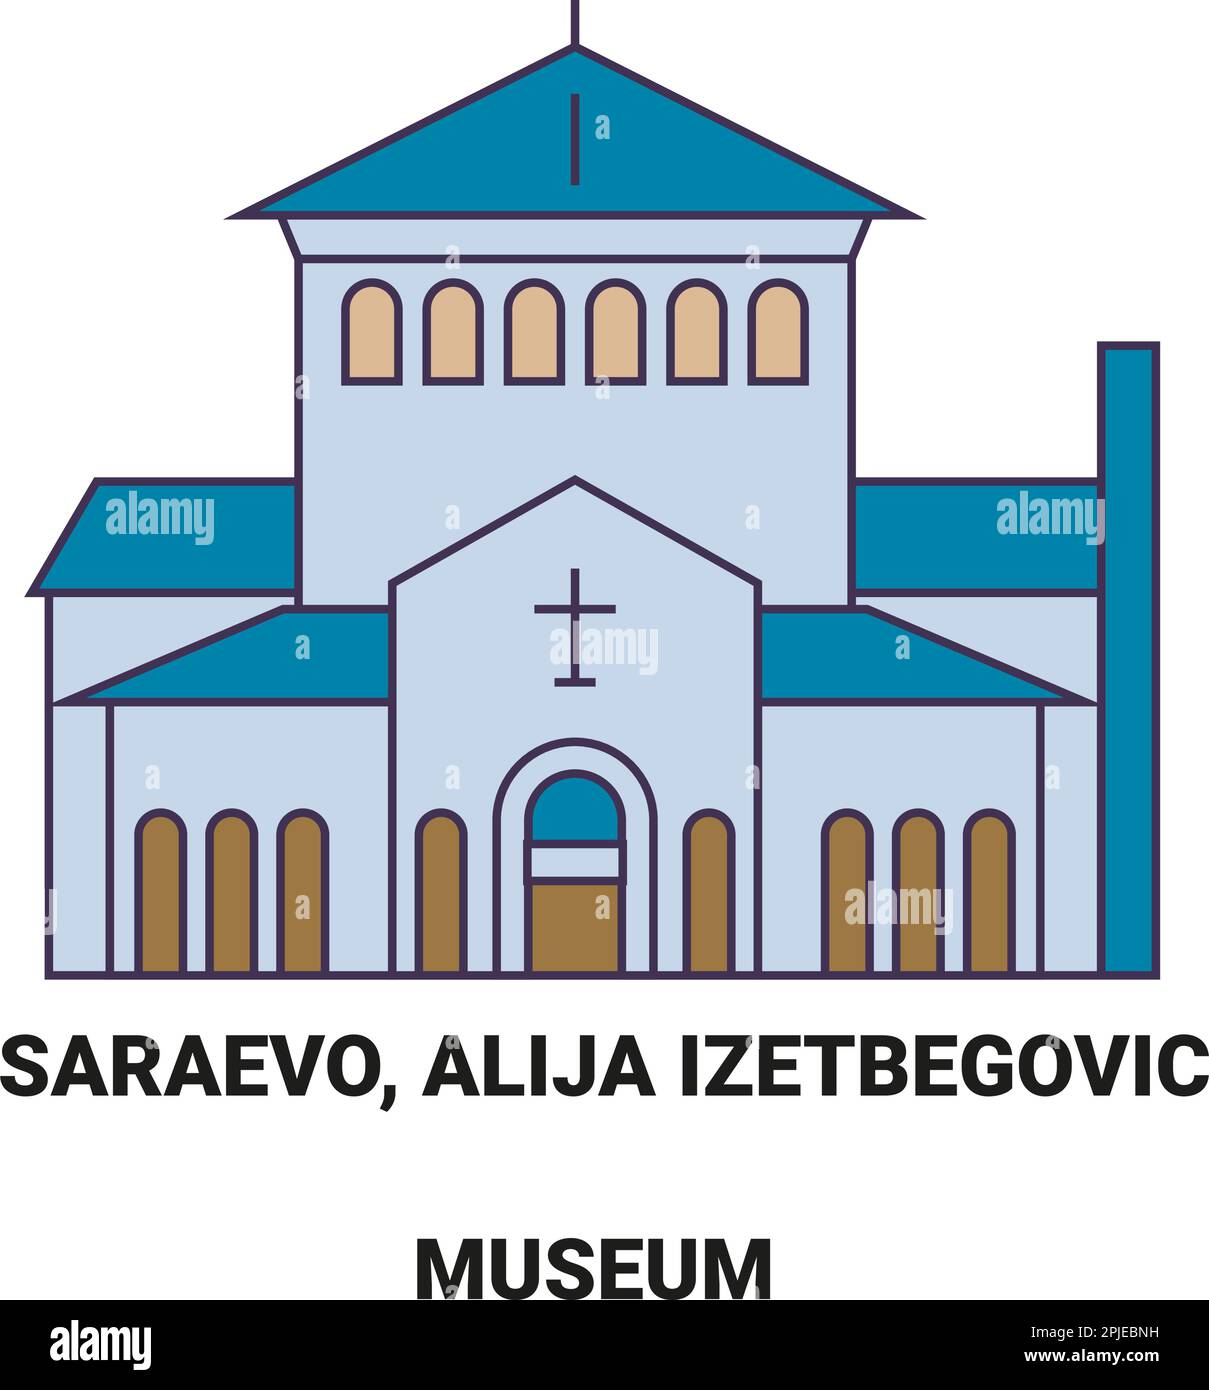 Bosnia And Herzegovina, Sarajevo, Alija Izetbegovic Museum travel landmark vector illustration Stock Vector